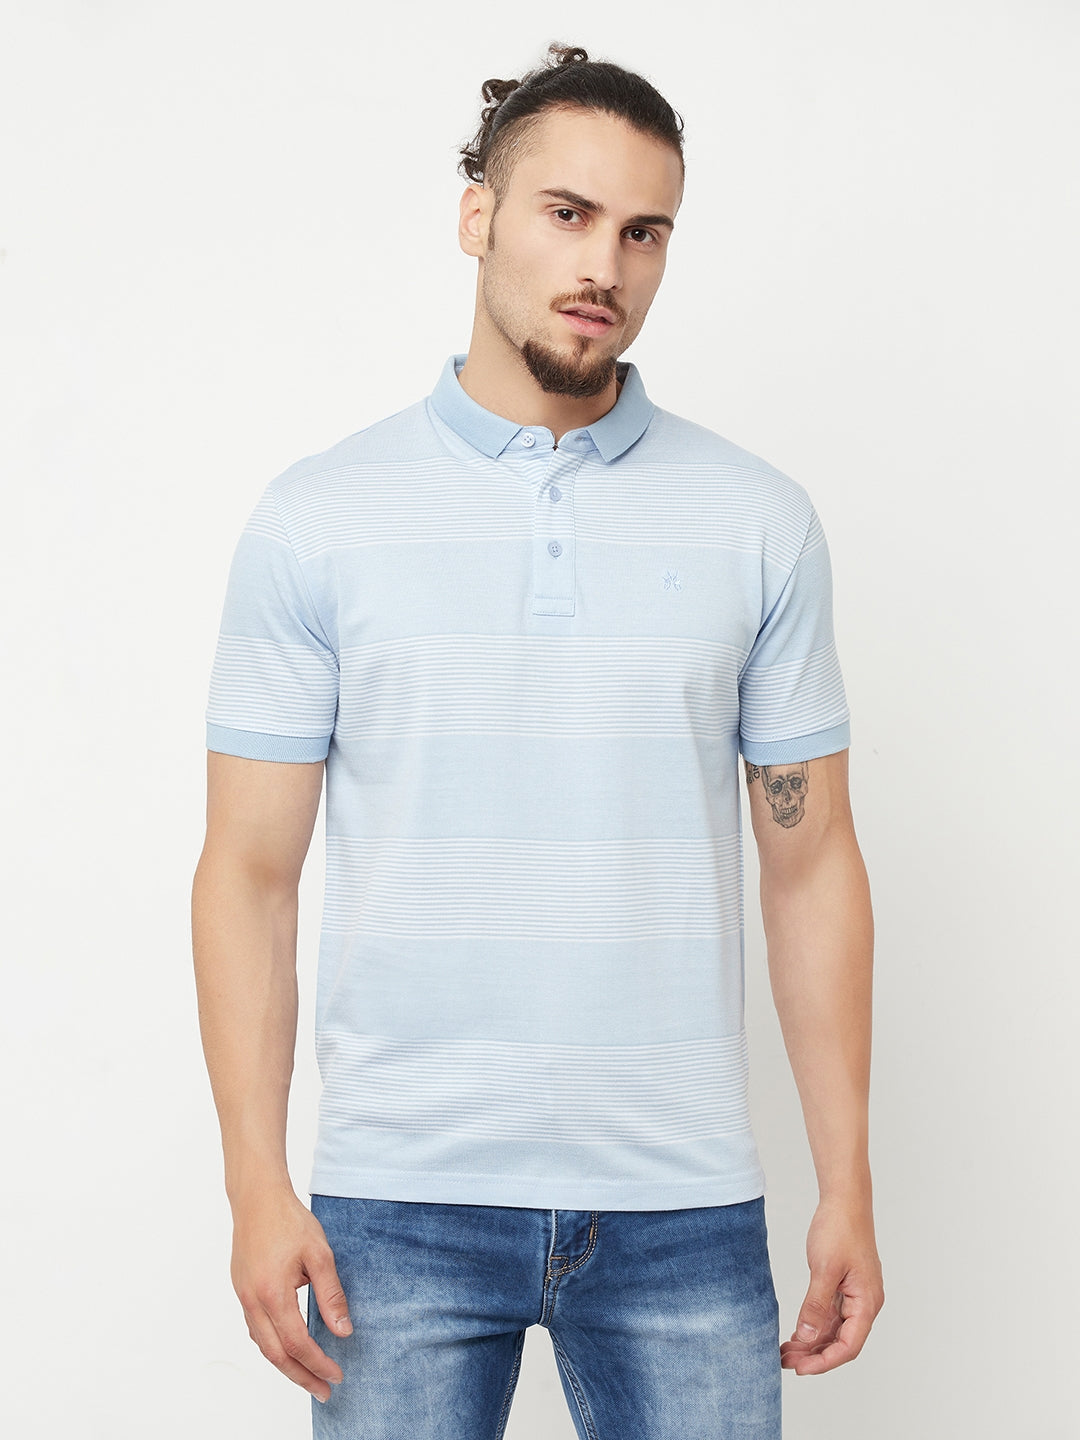 Blue Striped Polo T-Shirt - Men T-Shirts